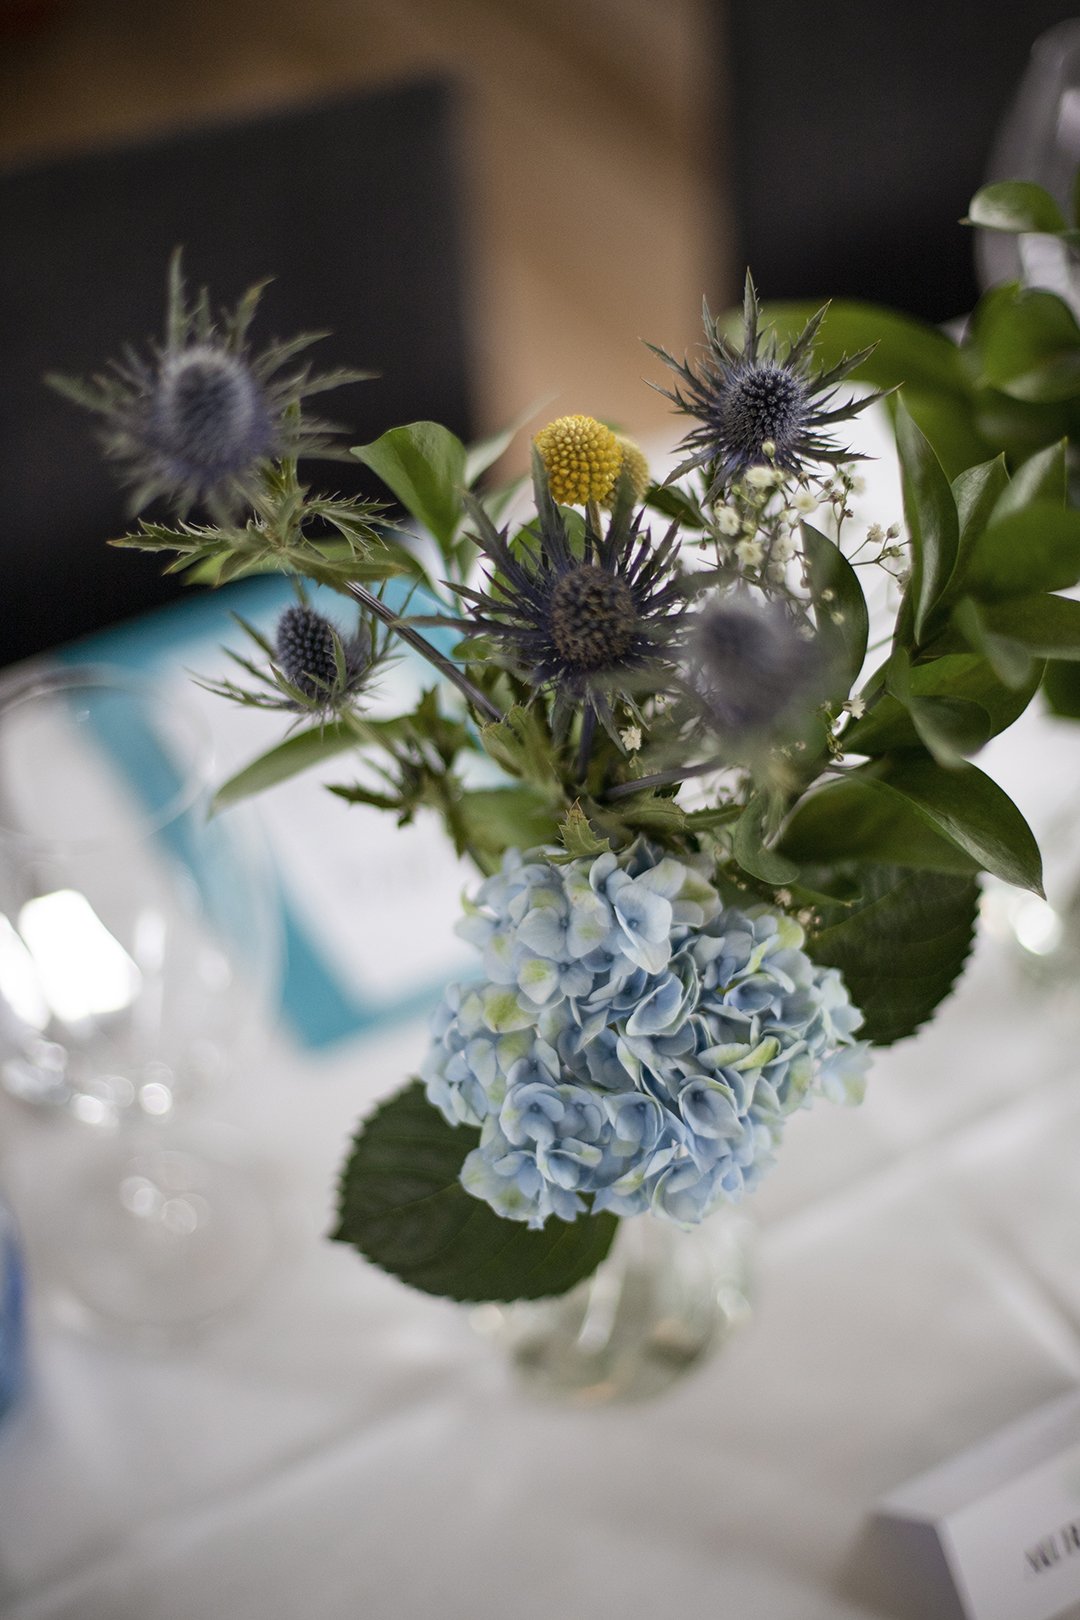  Småvaser med blomster i blåtoner 